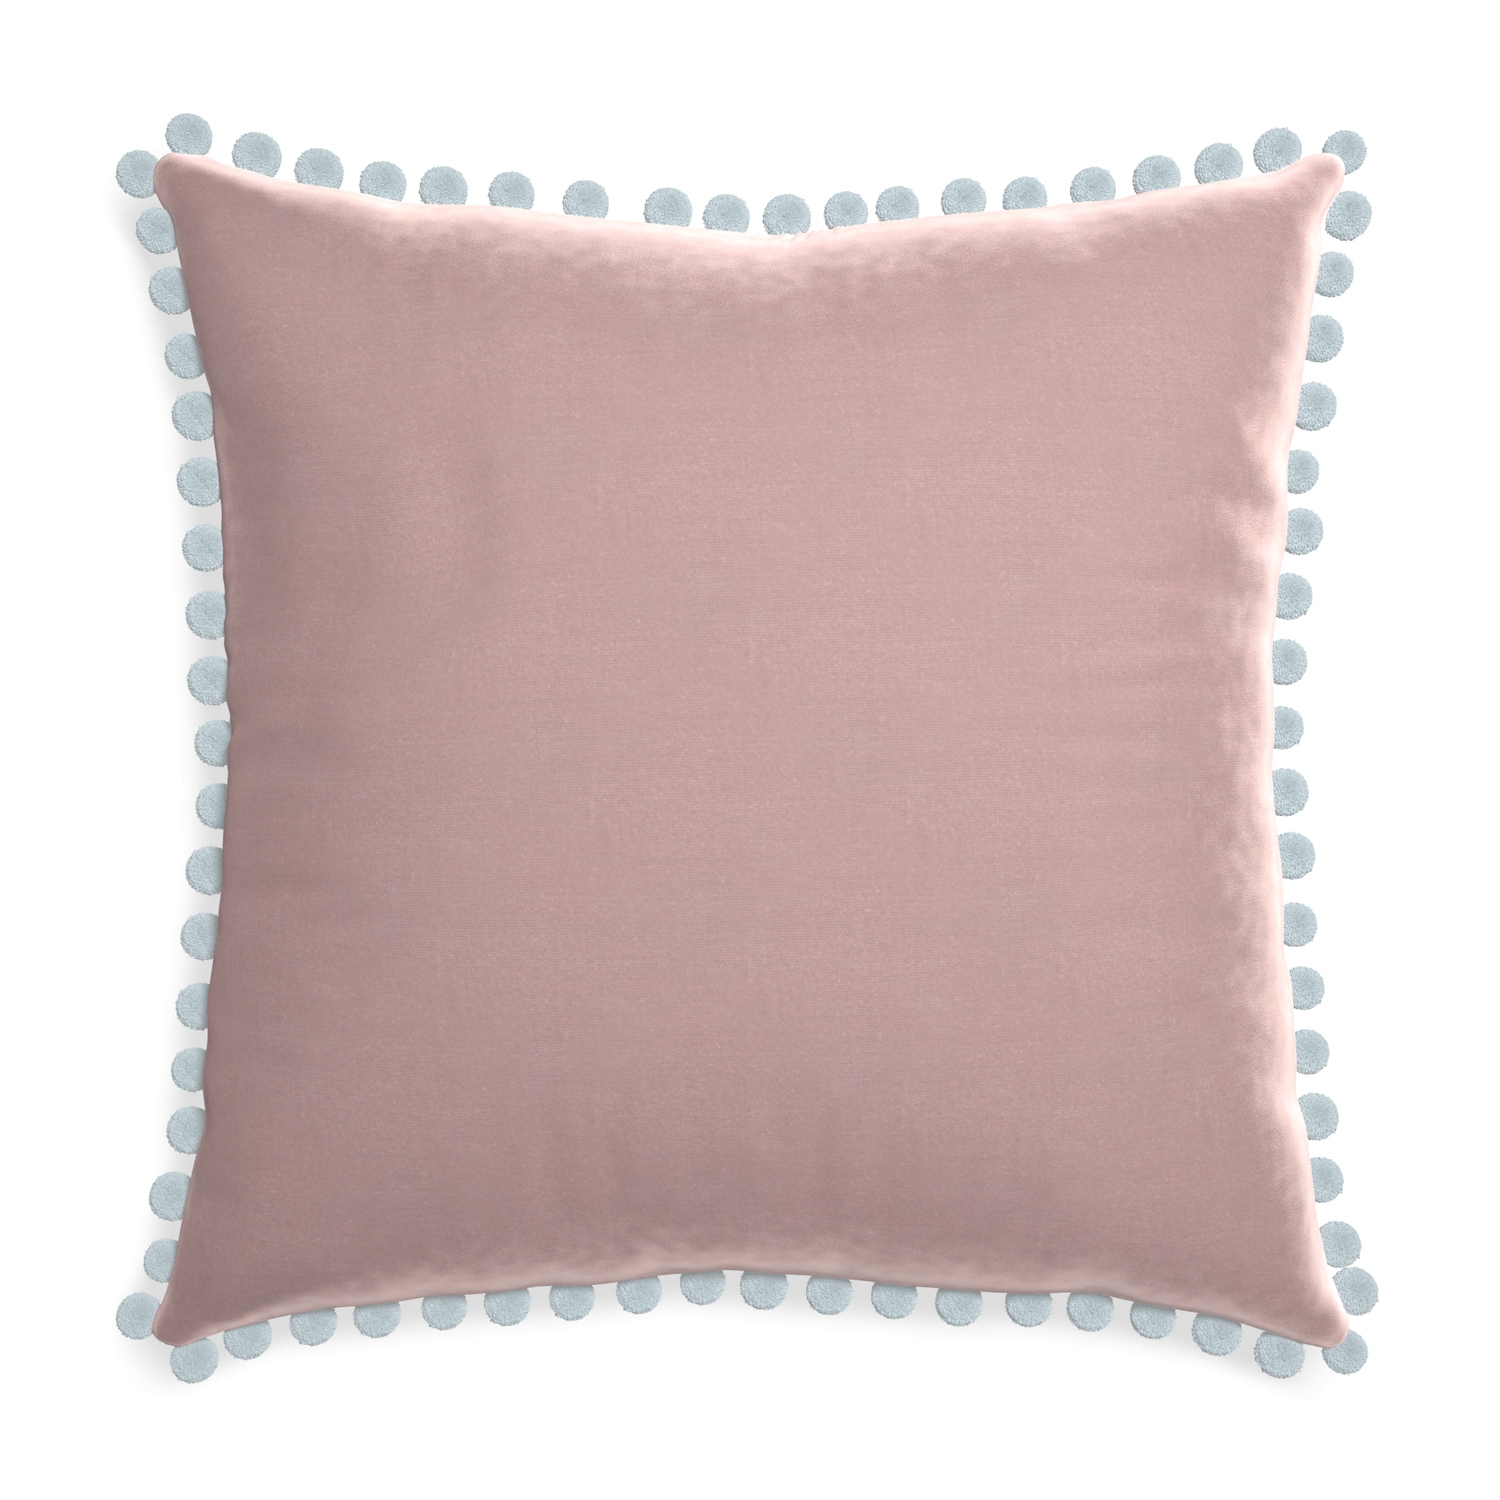 Euro-sham mauve velvet custom pillow with powder pom pom on white background